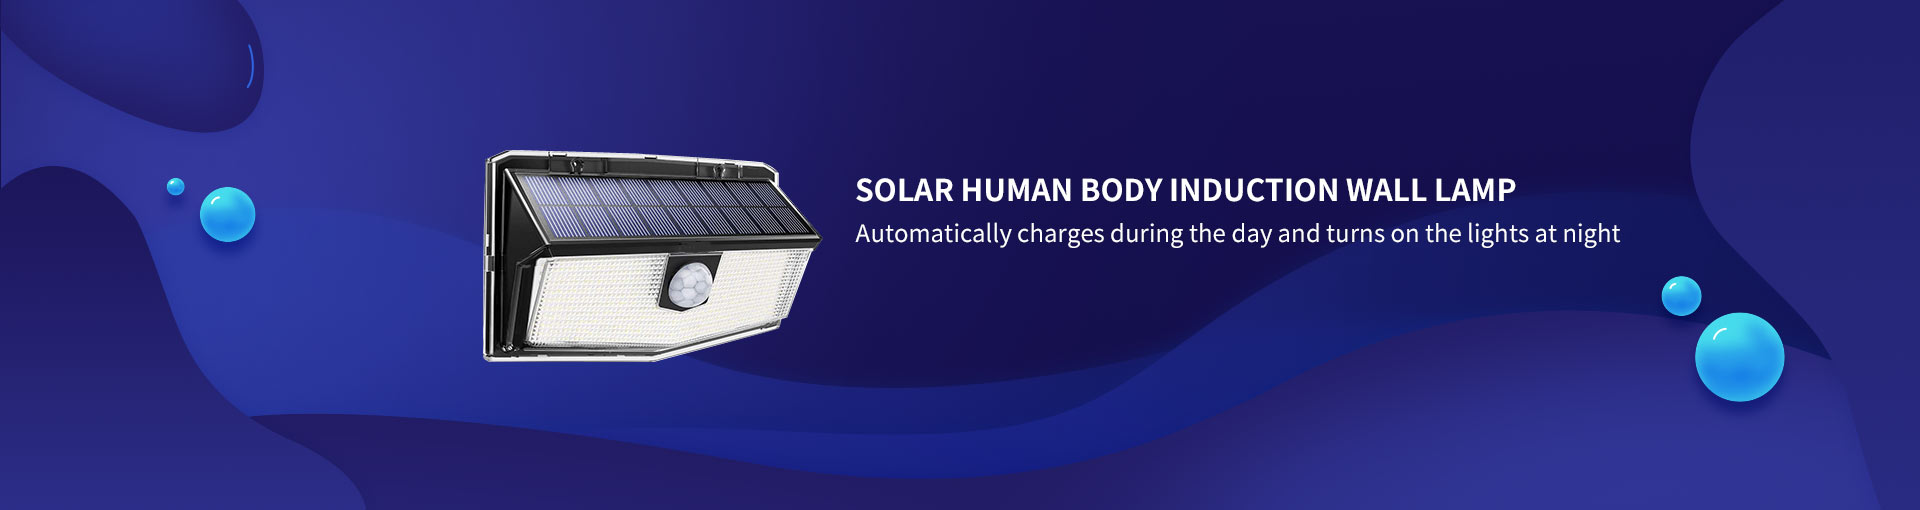 SOLAR HUMAN BODY INDUCTION WALL LAMP